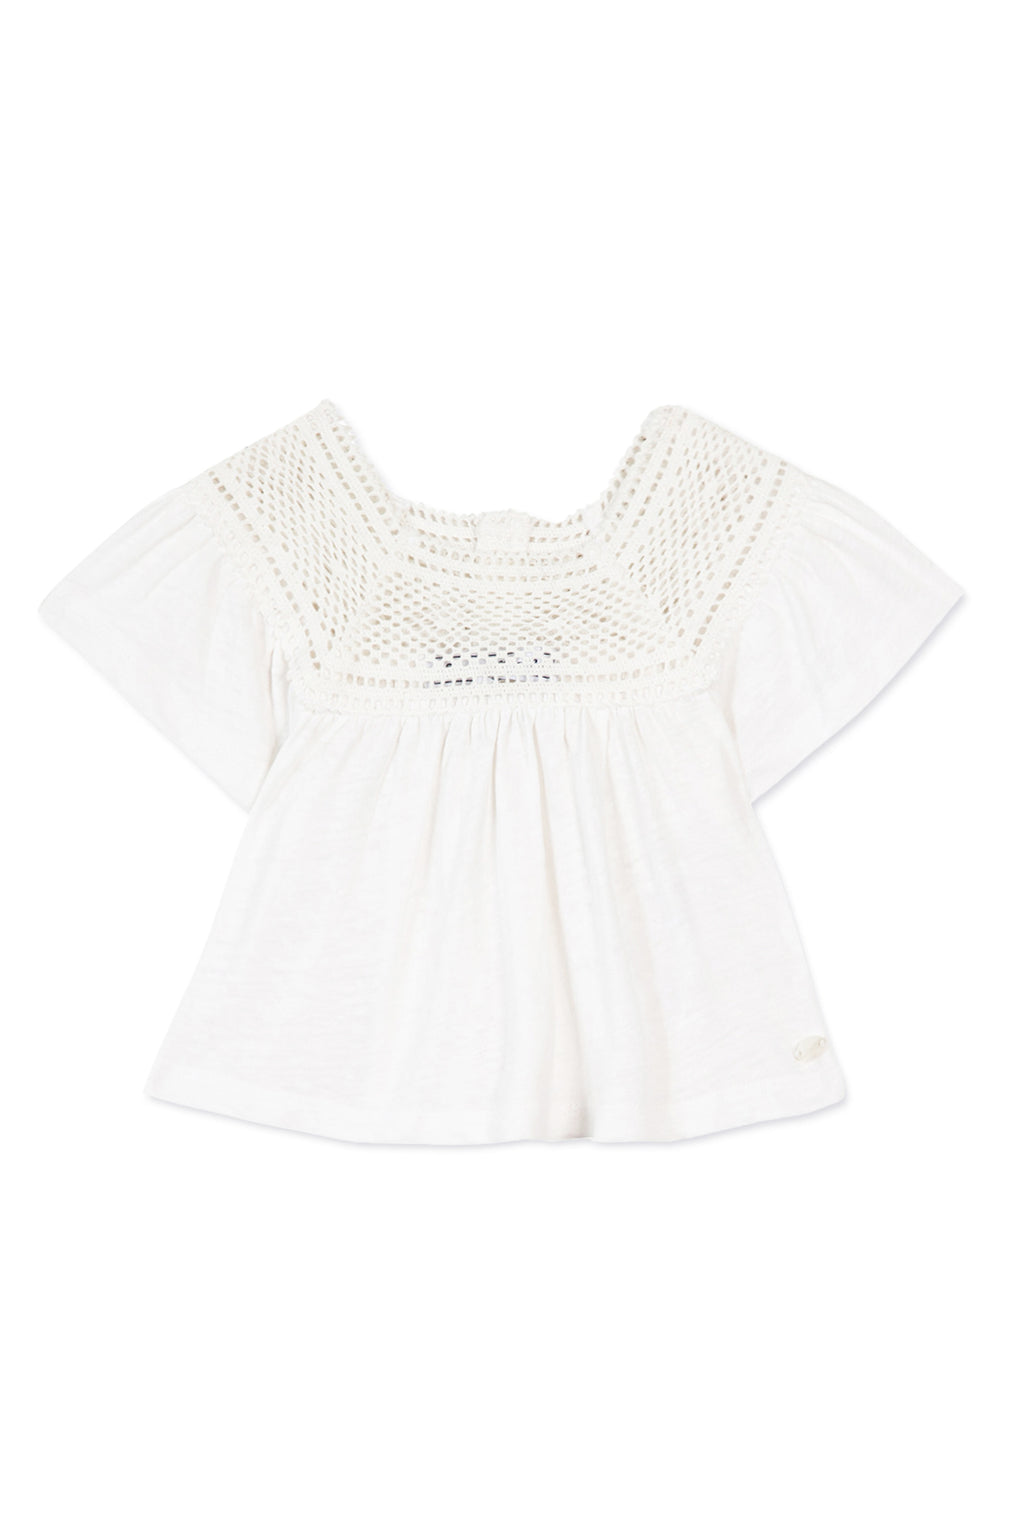 T-shirt - Blanc crochet coton